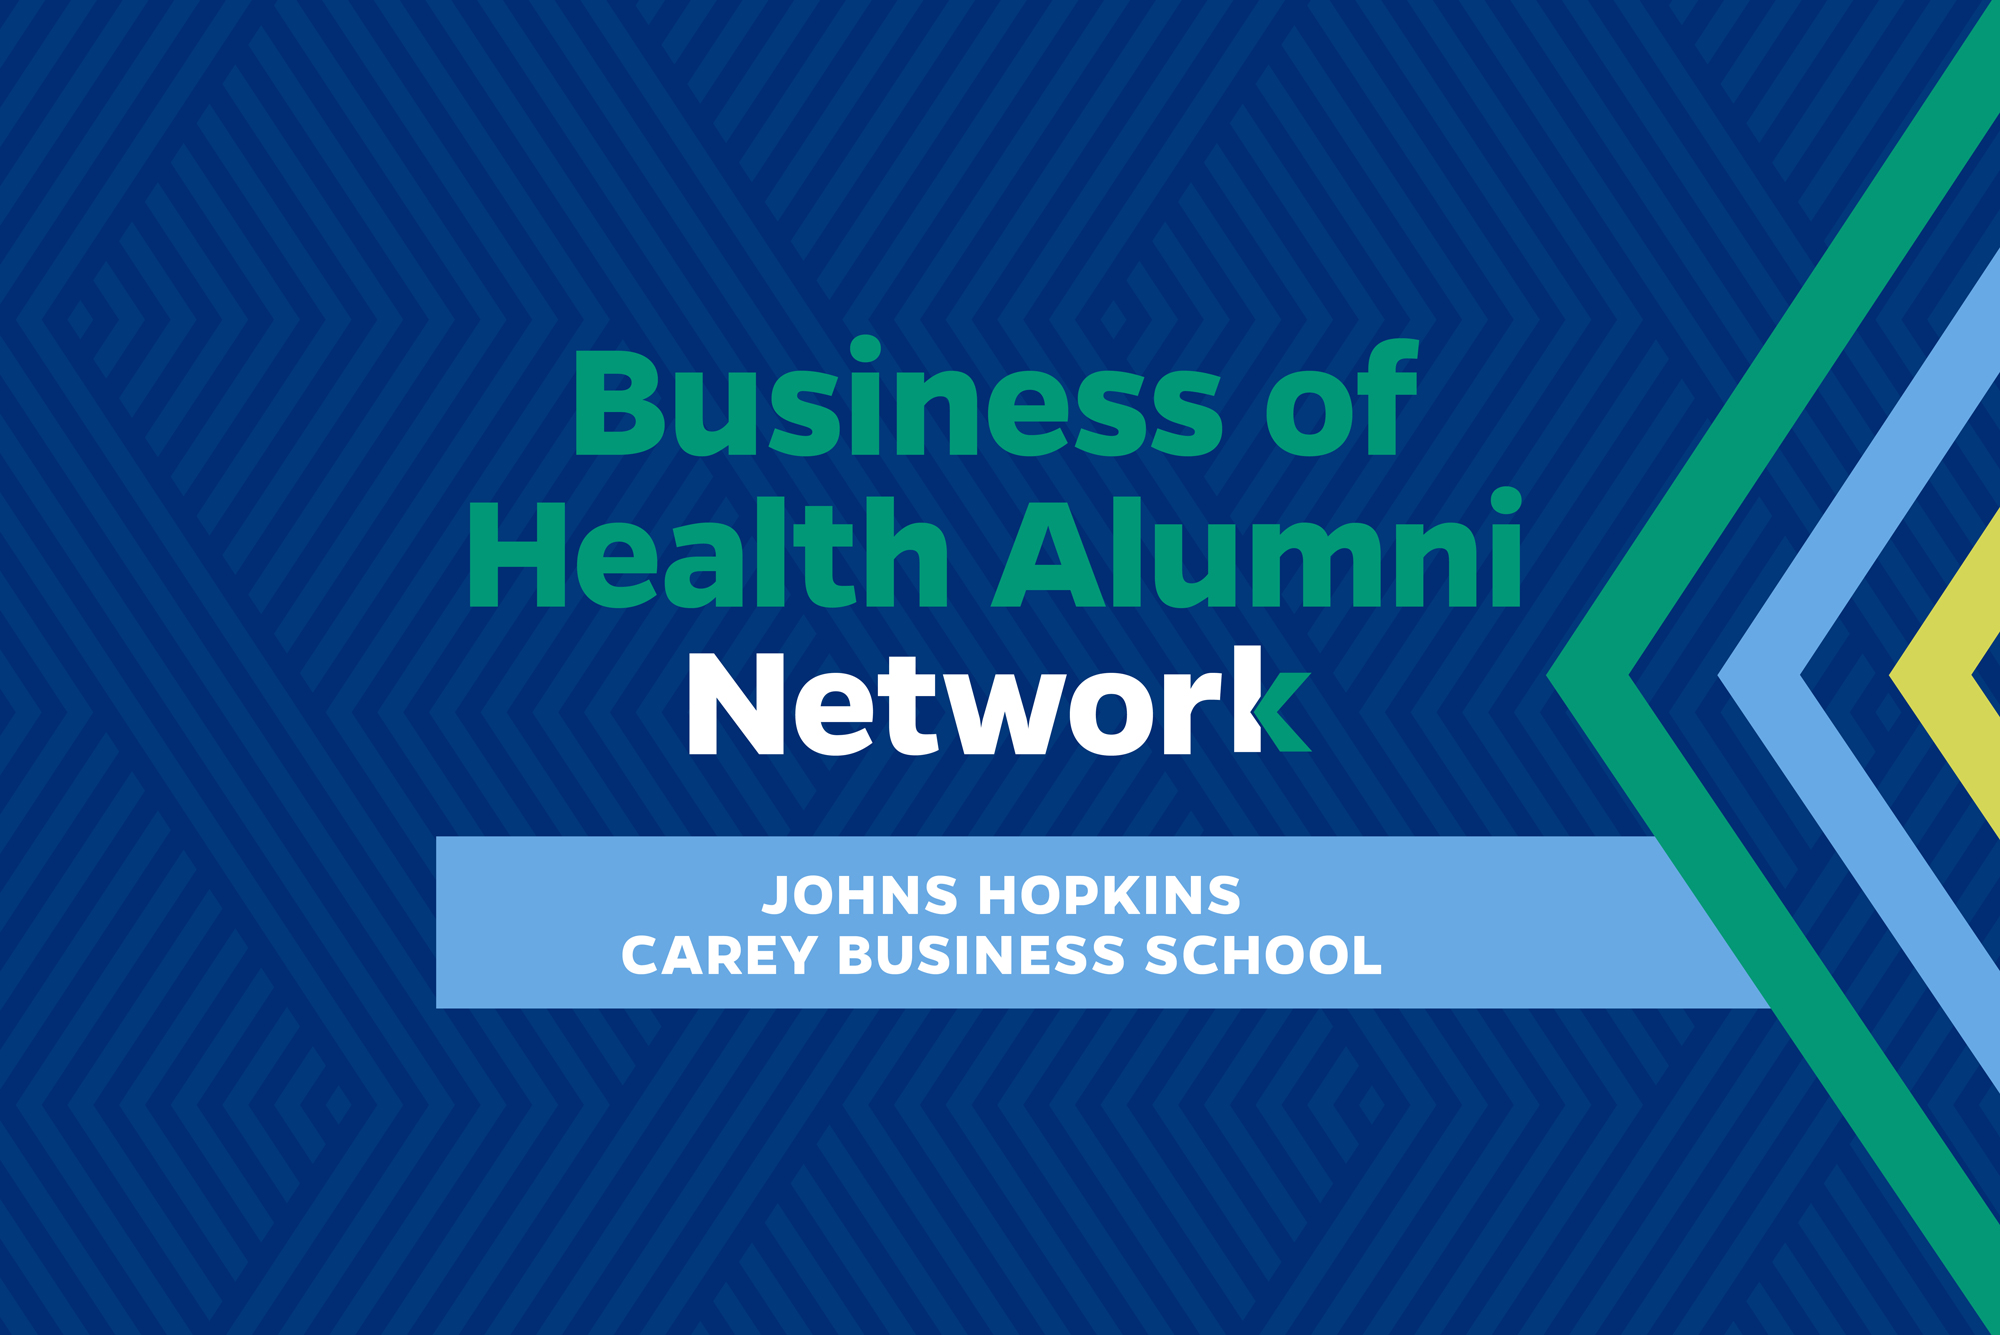 Carey Business School: Business of Health Alumni Network Launch Johns